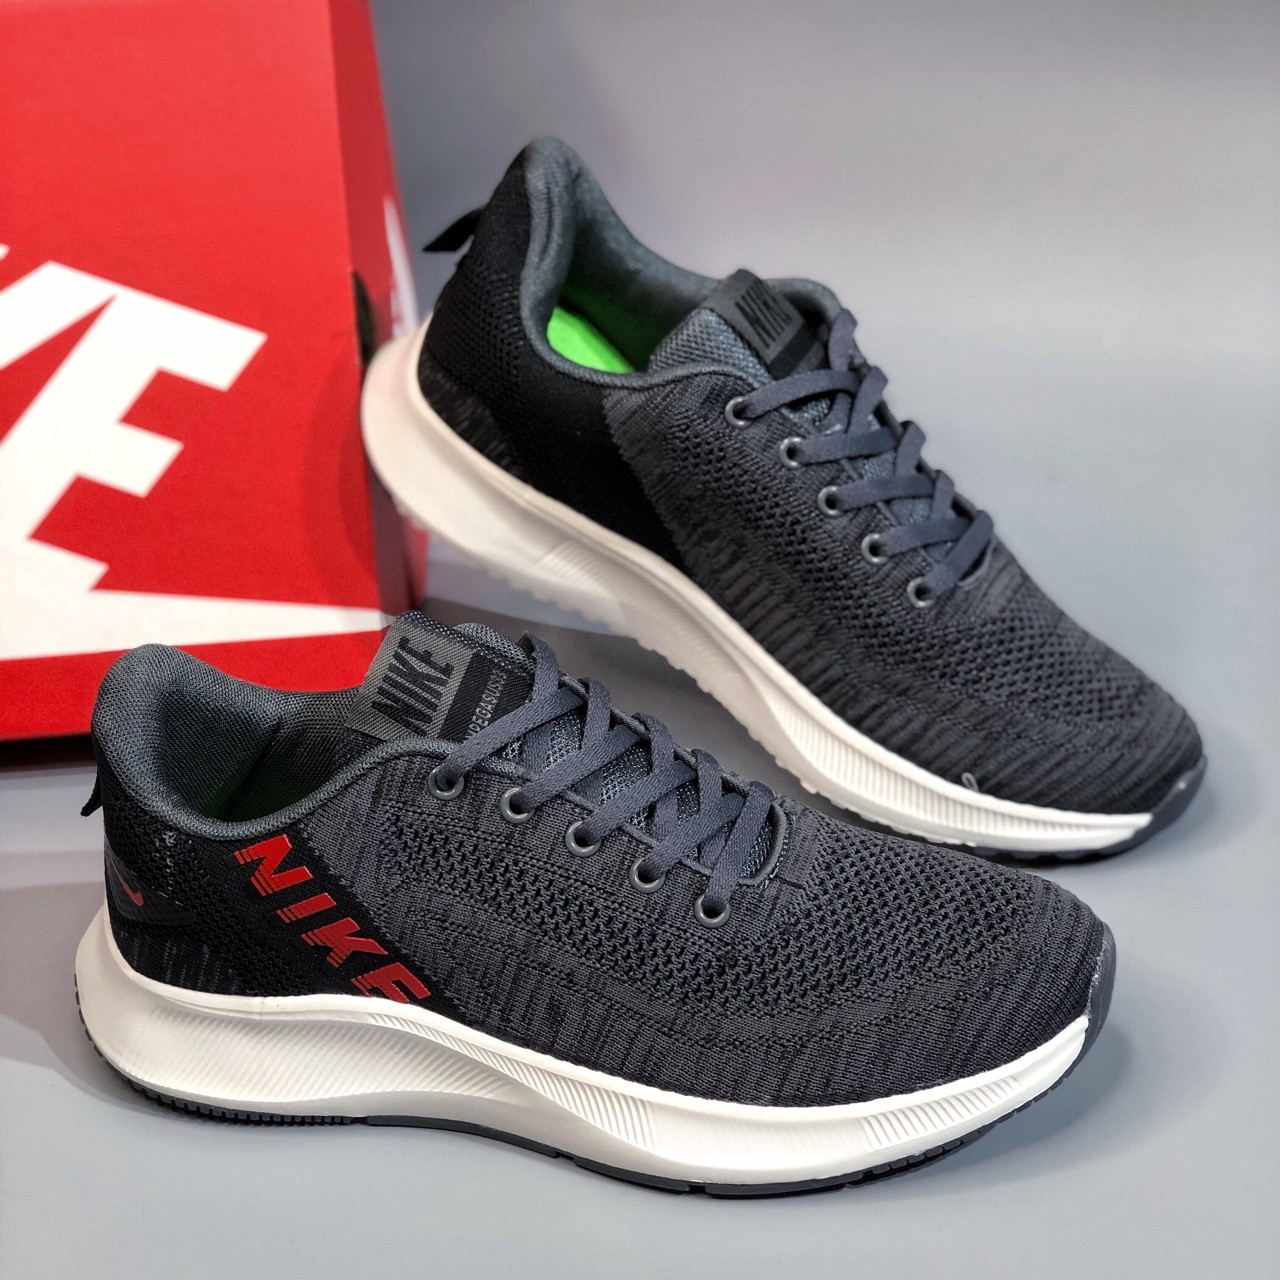 Giày Nike Zoom V202 xám đen